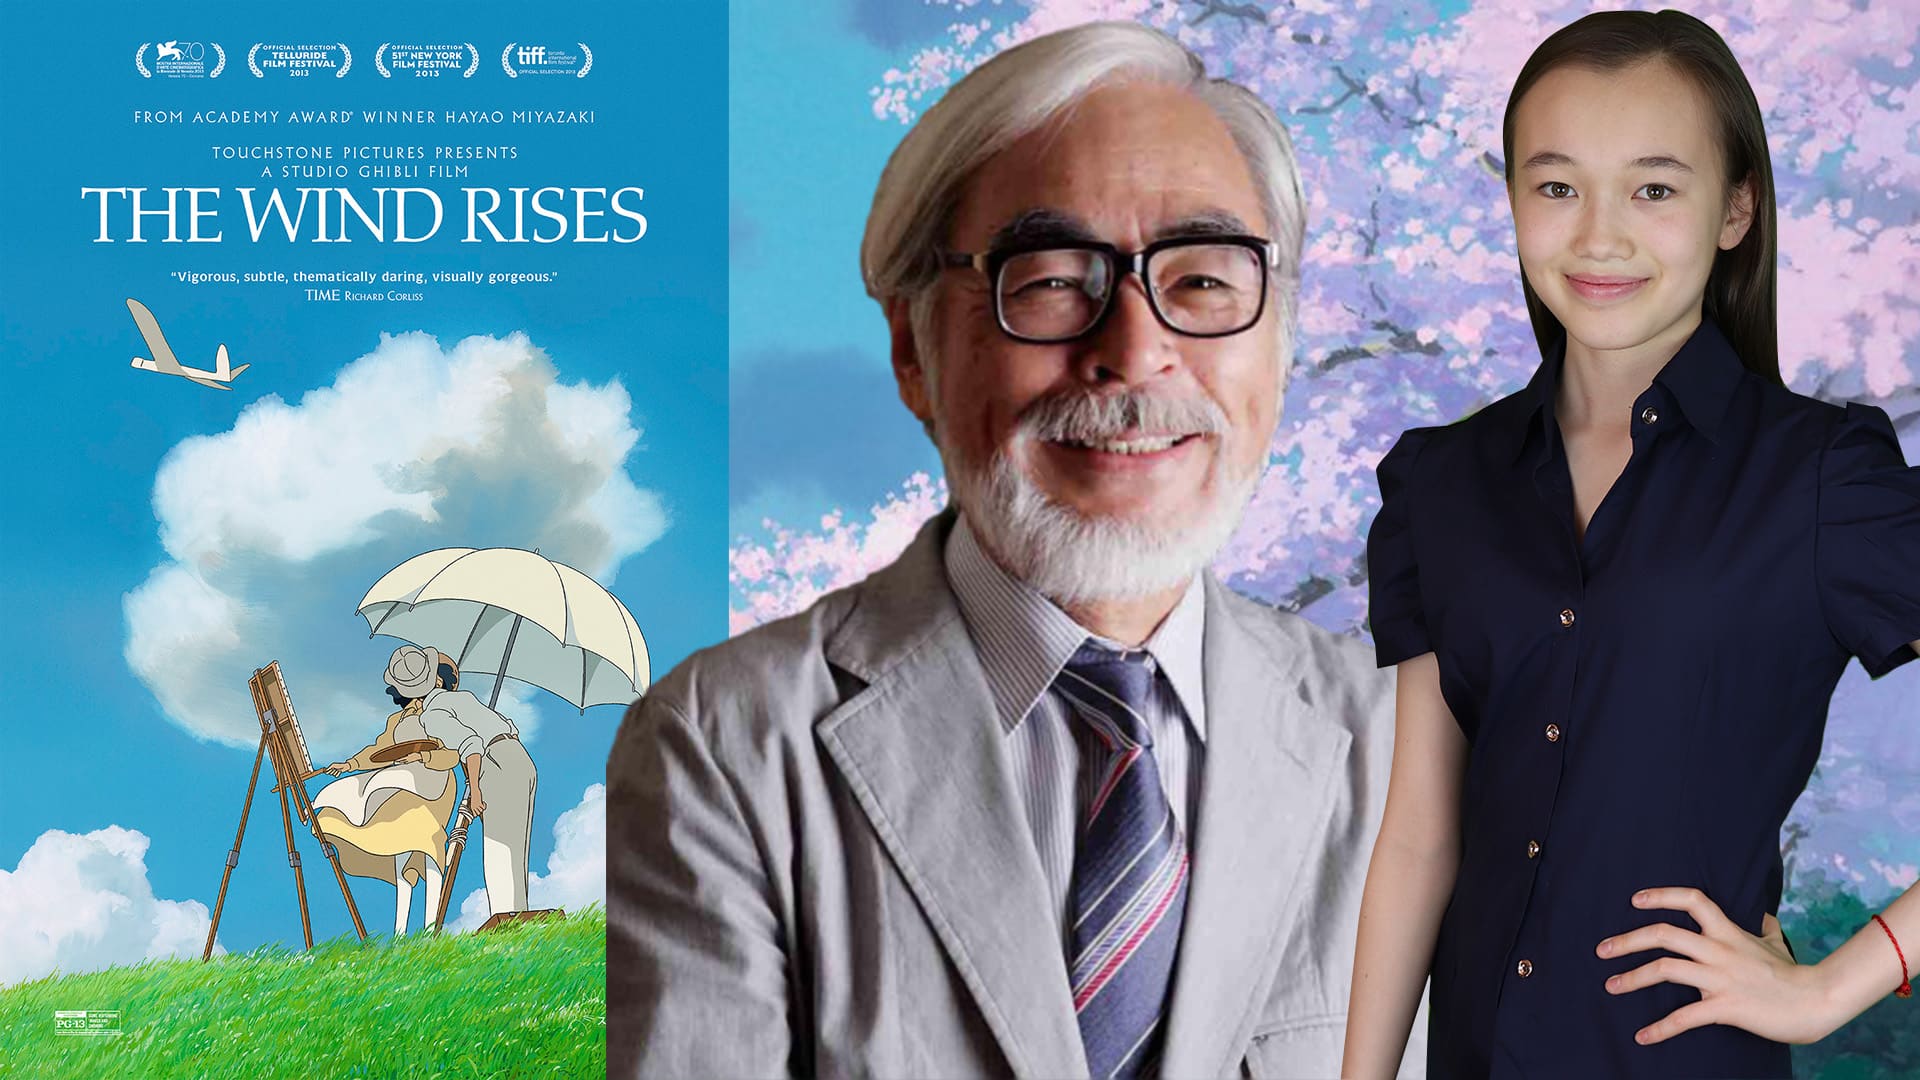 the wind rises movie. best film reviews. the wind rises movie. movie analysis. maria chzhen.